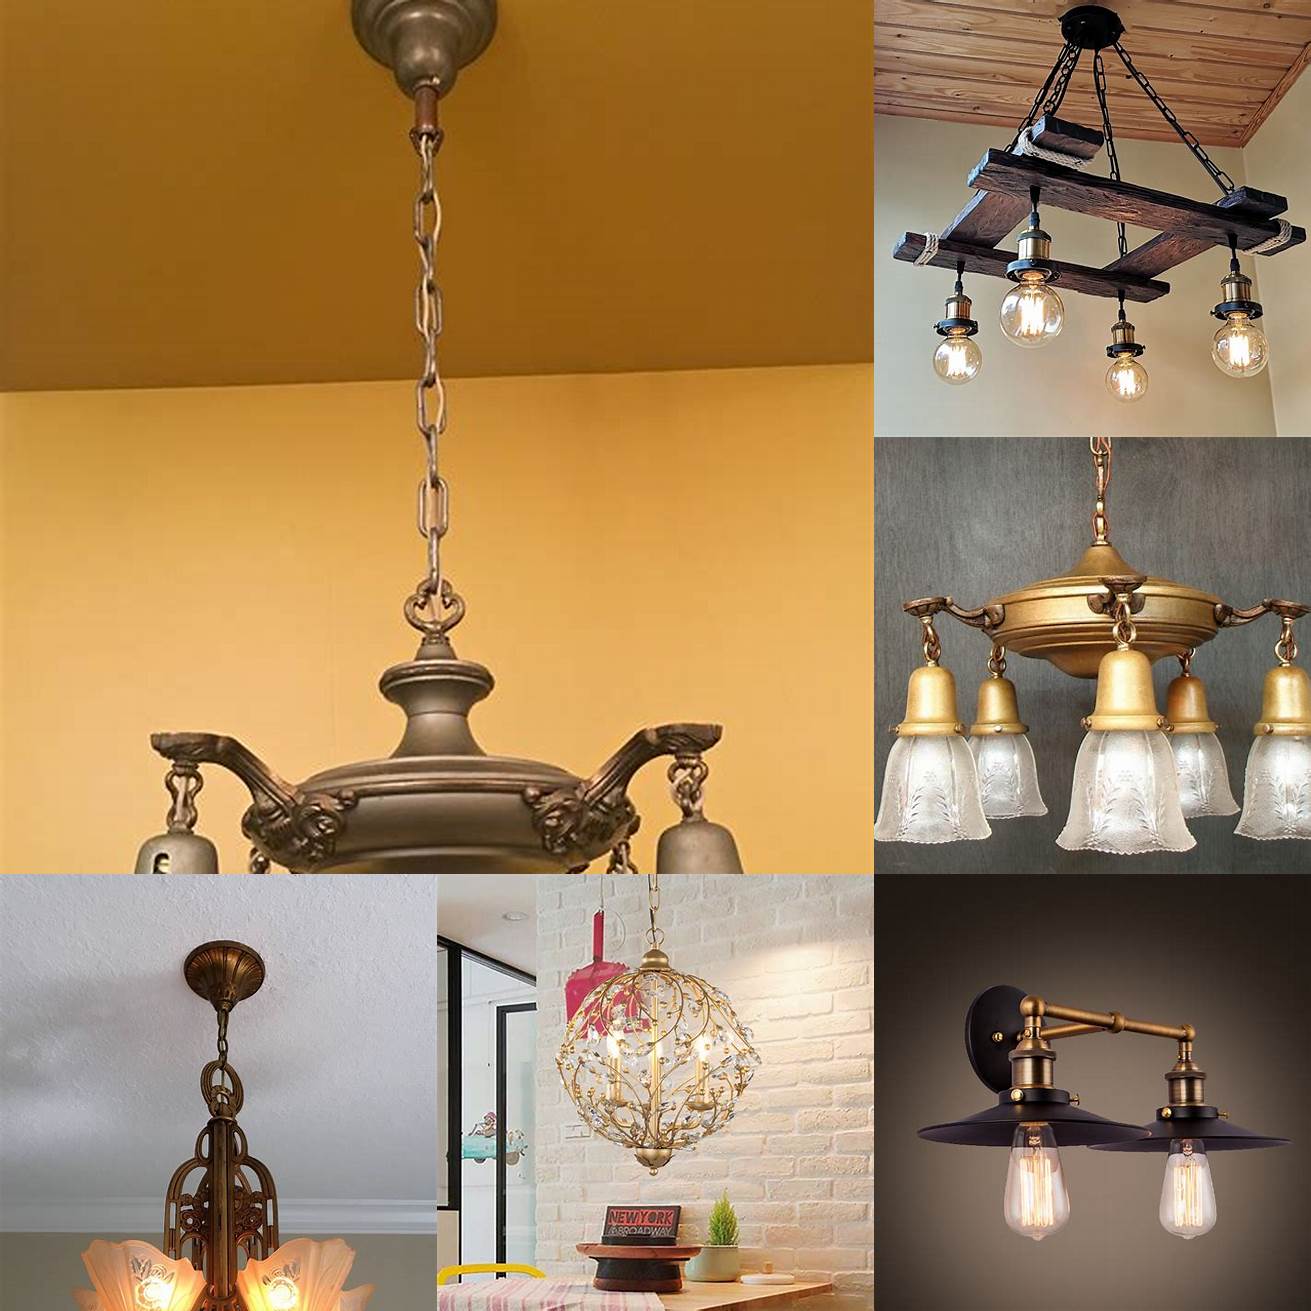 Antique or vintage-inspired lighting fixtures